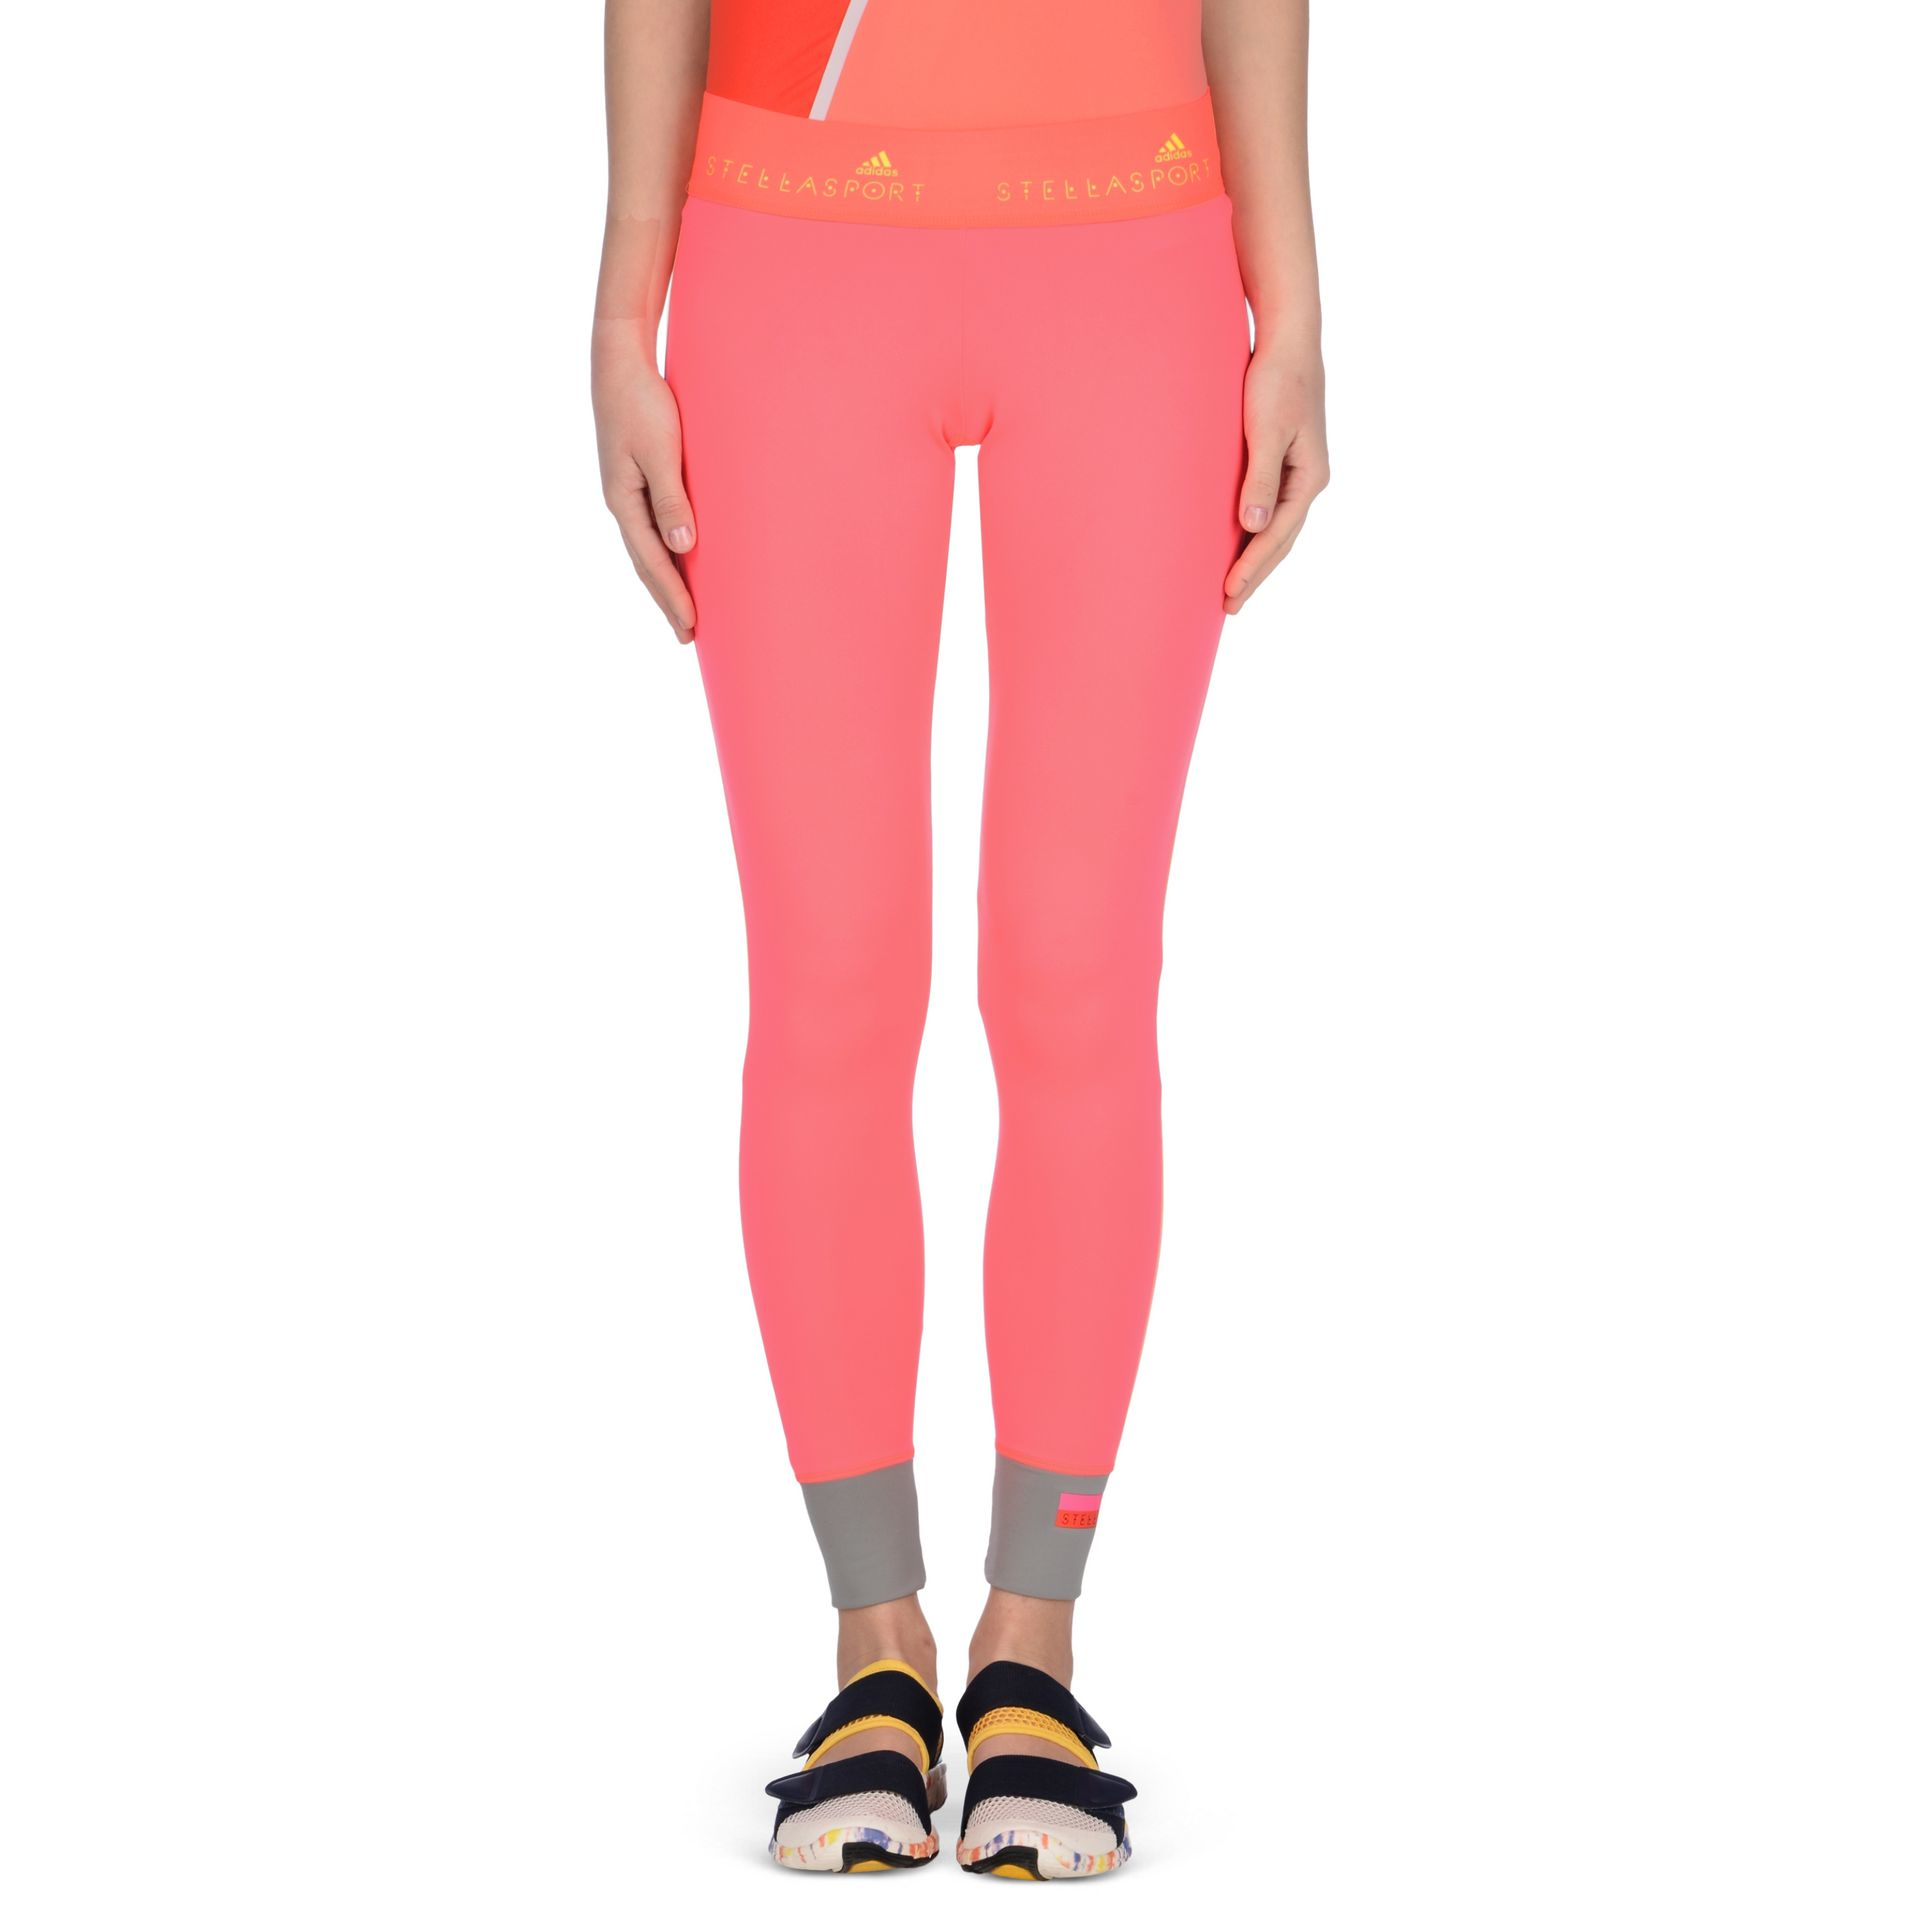 Lyst - Adidas By Stella Mccartney Pink Long Leggings in Pink